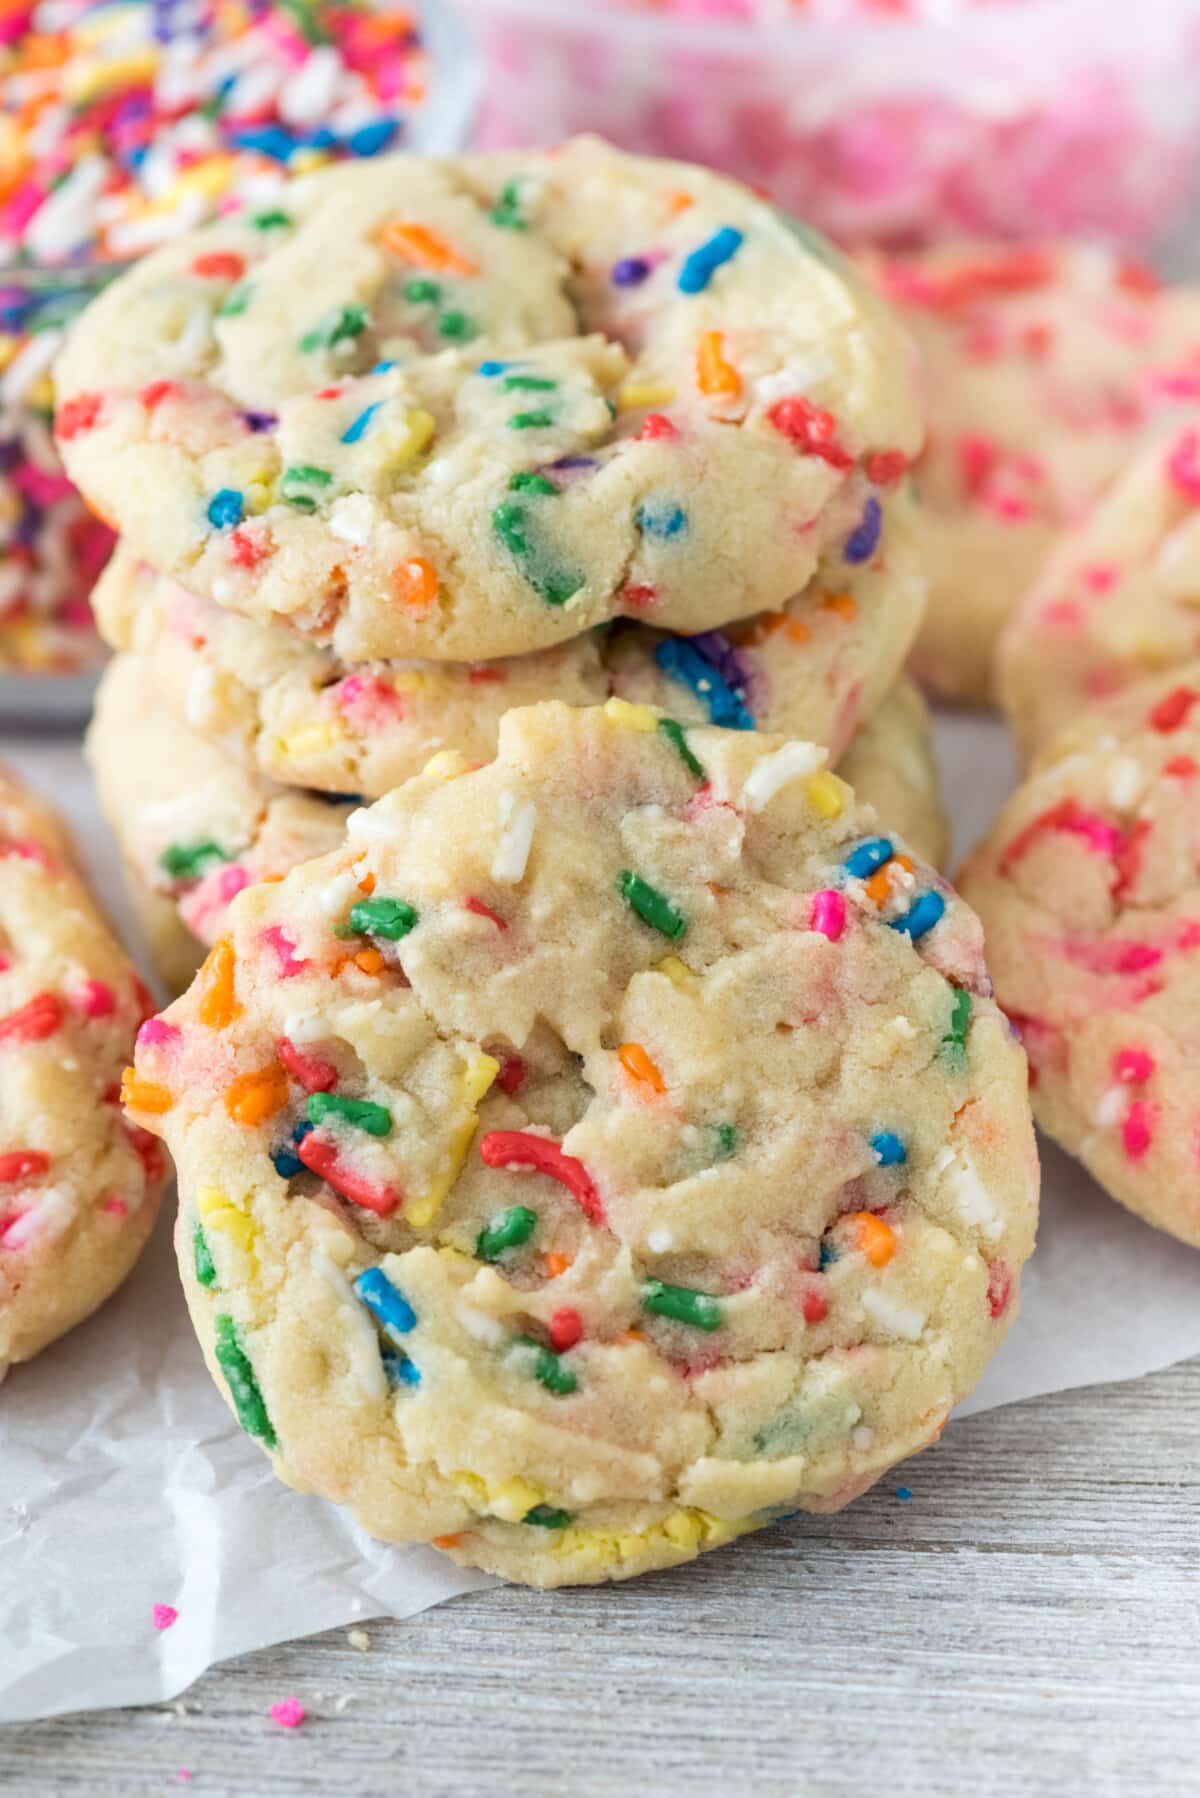 cookies with rainbow sprinkles baked inside